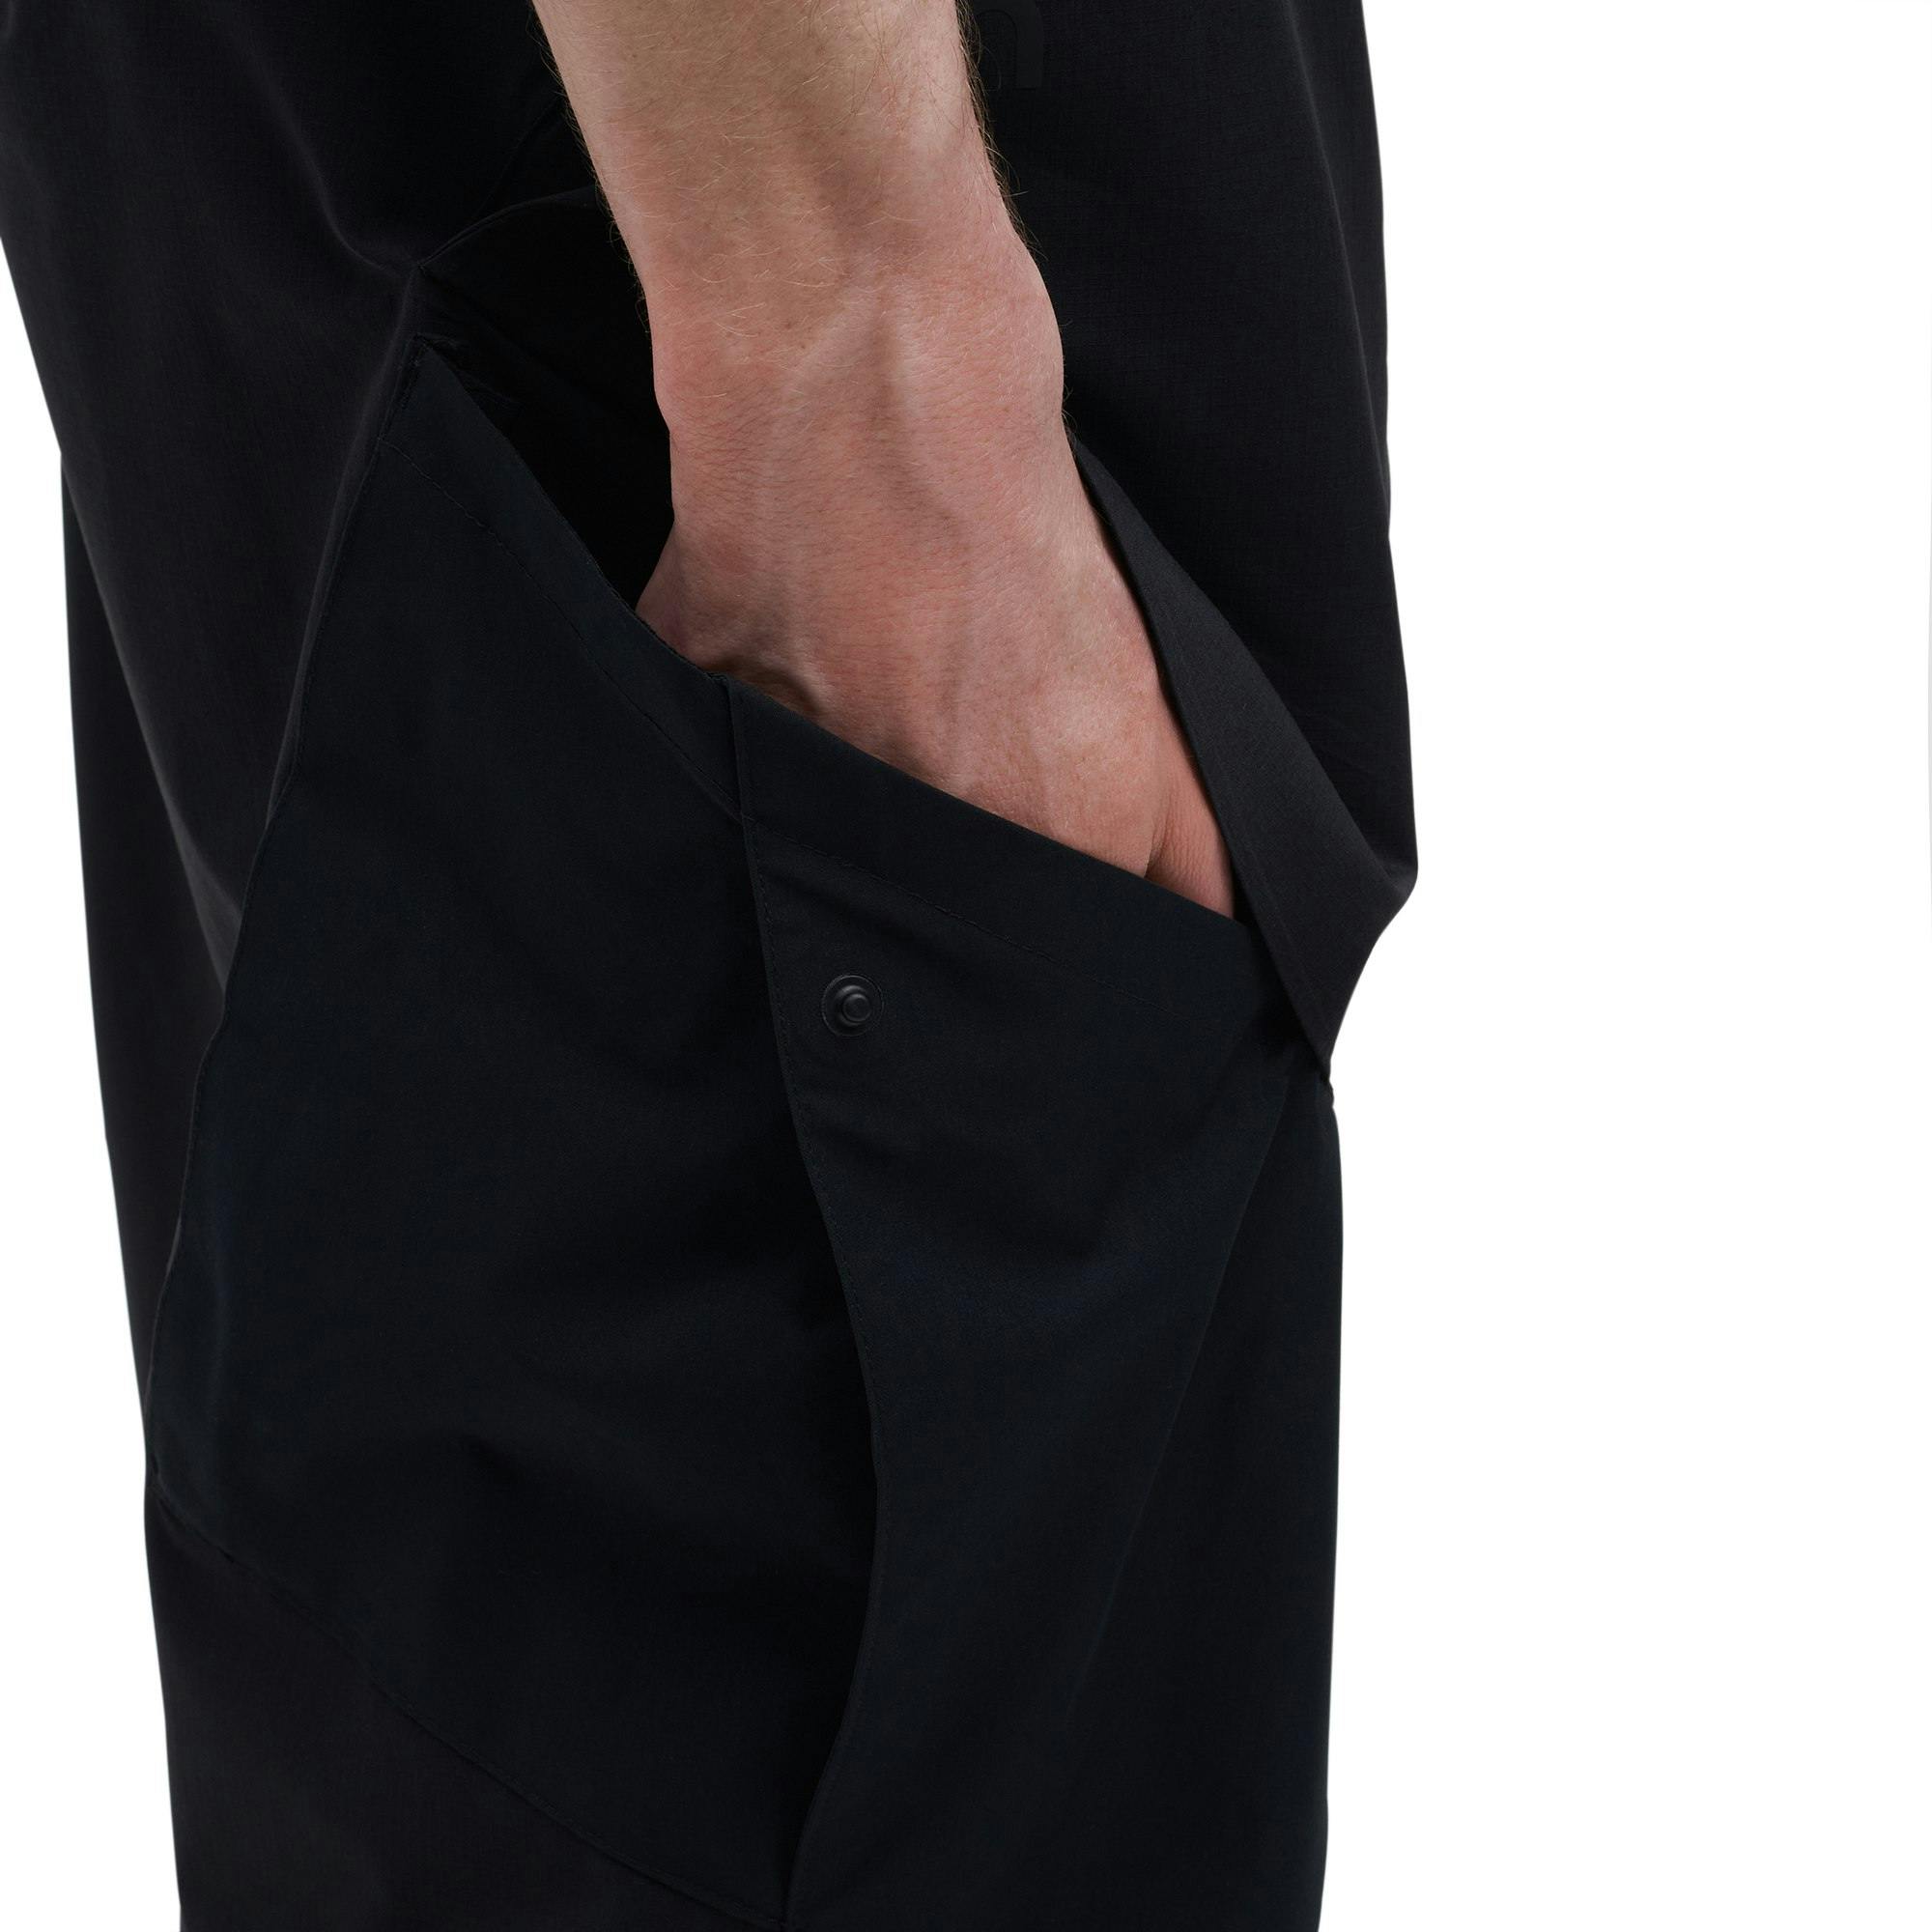 On DWR Explorer Hybrid Pants - Black, Active Pants & Joggers